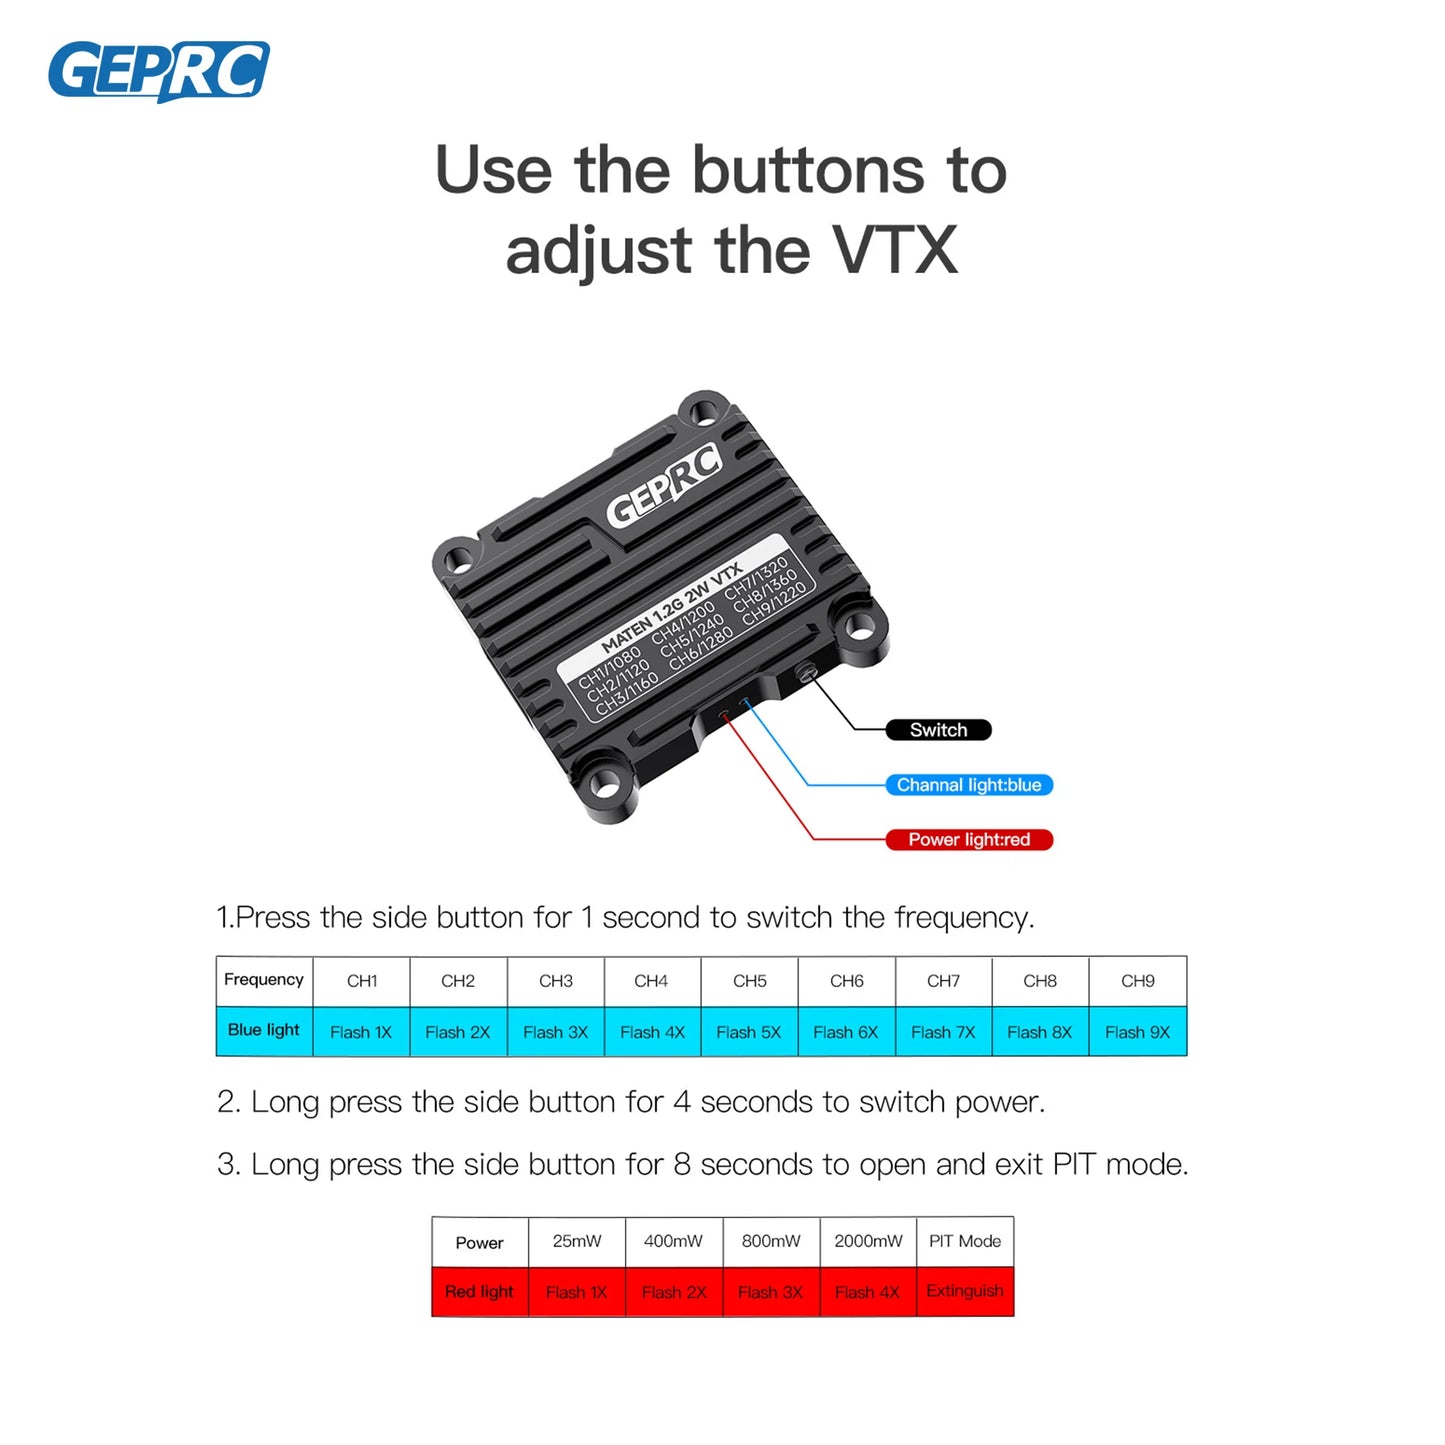 GEPRC MATEN 1.2G 2W VTX, GEPRC Use the buttons to adjust the VTX Switch Channal light blue Power